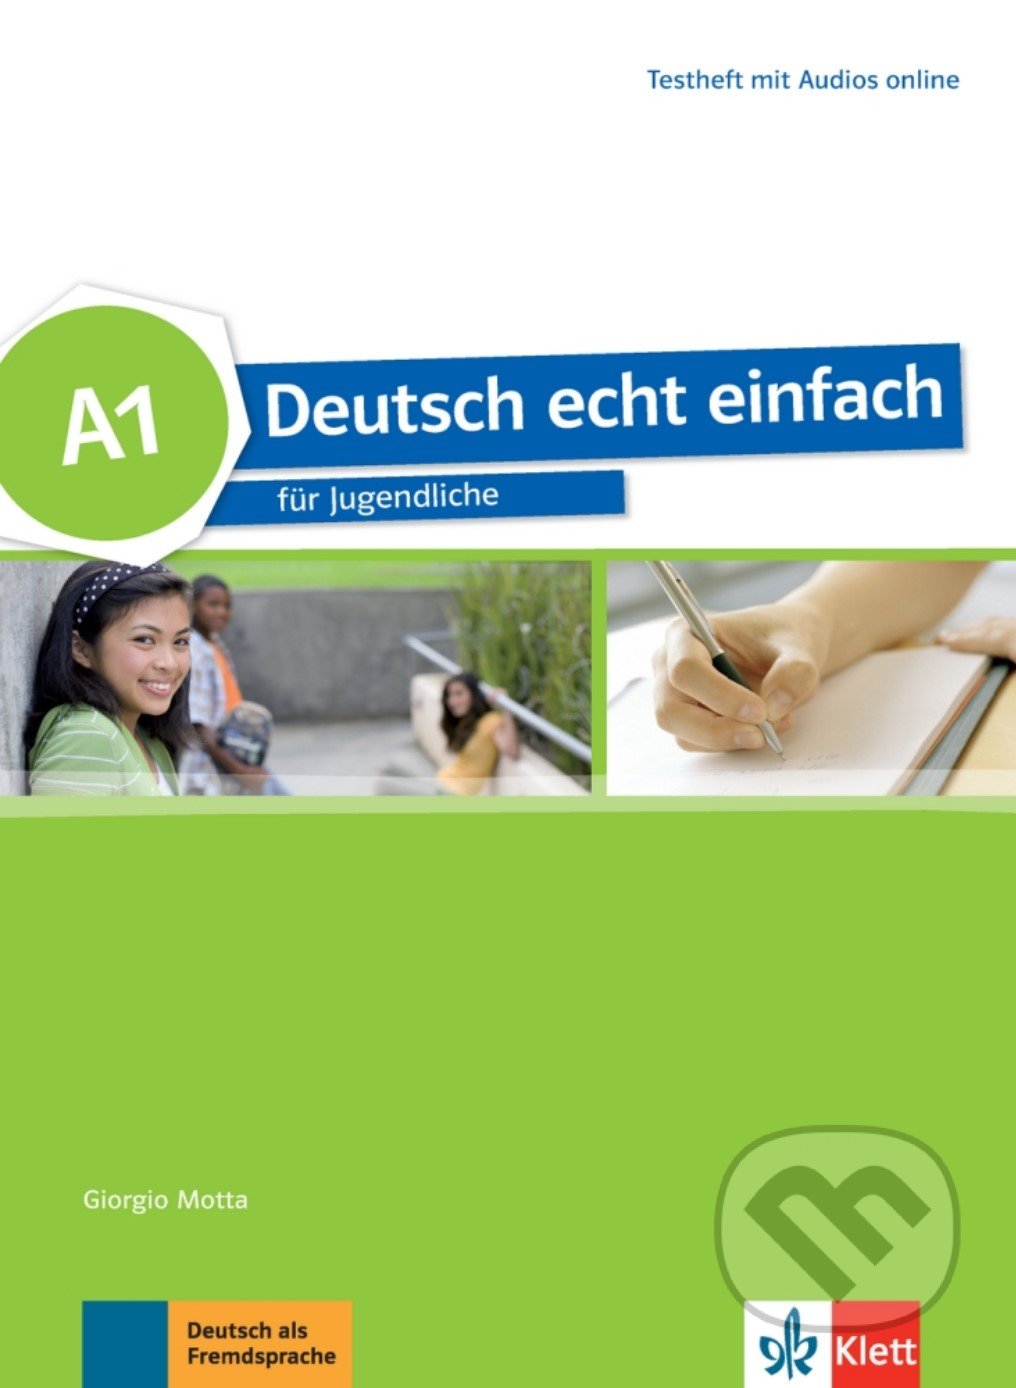 Deutsch echt einfach! 1 (A1) – Testheft, Klett, 2017